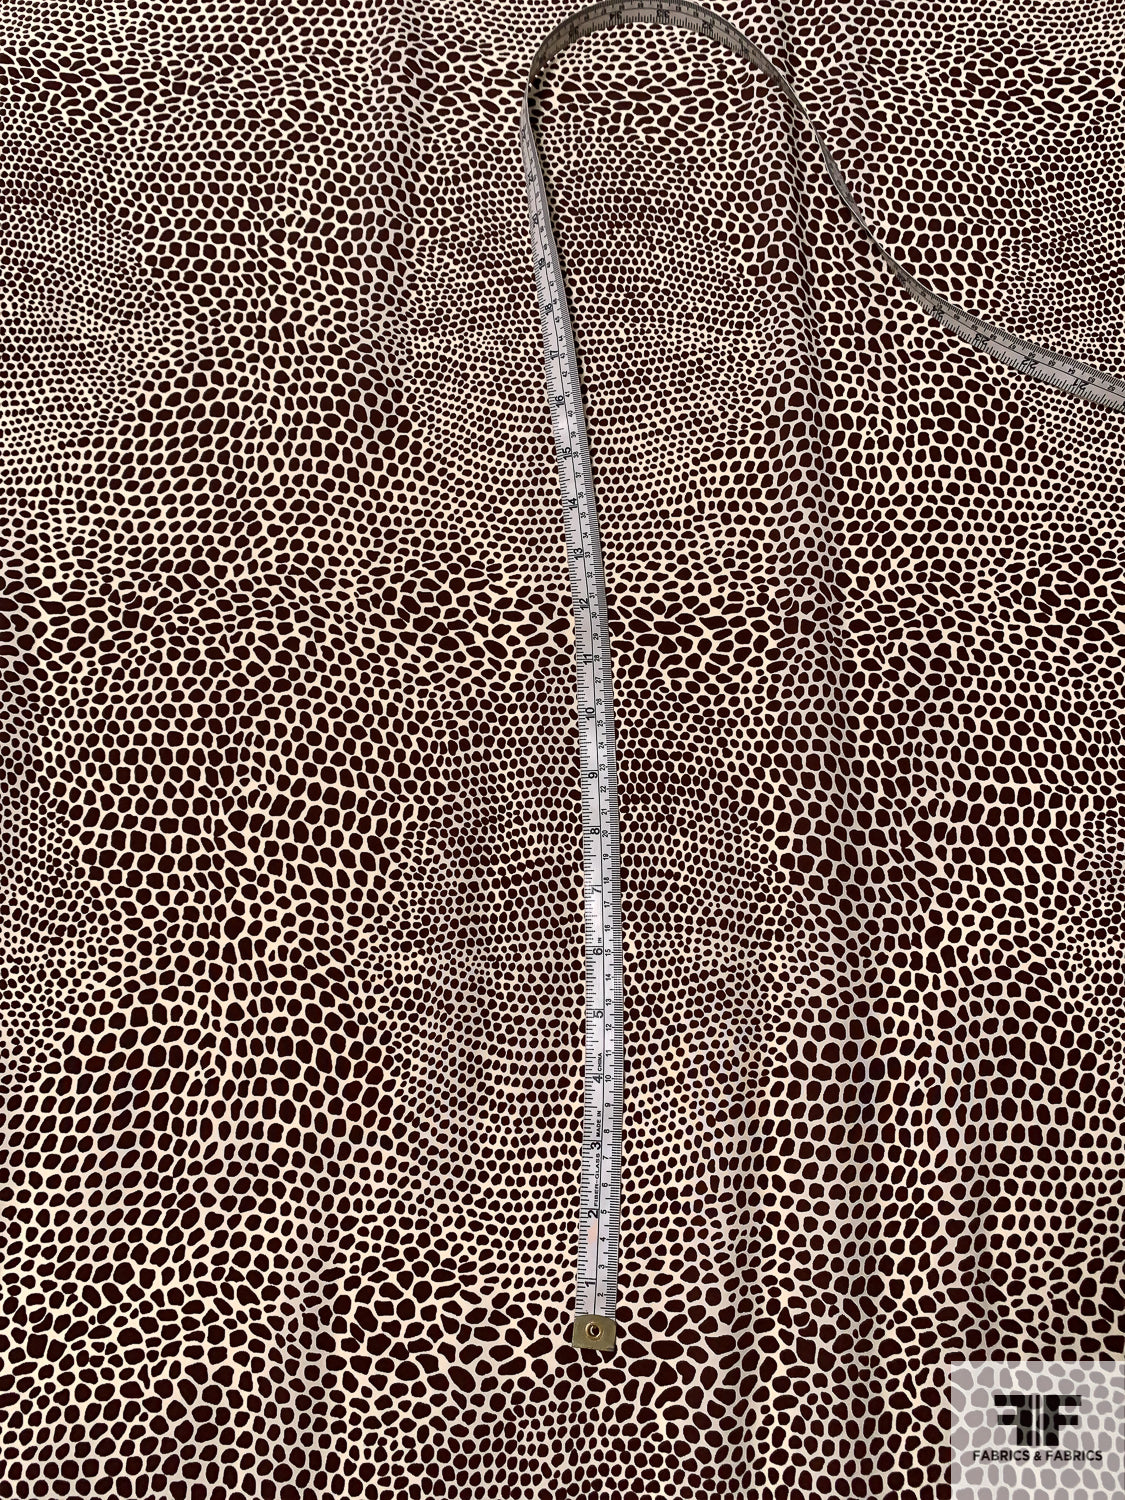 Alligator Skin Printed Silk Crepe de Chine - Chocolate Brown / Ivory